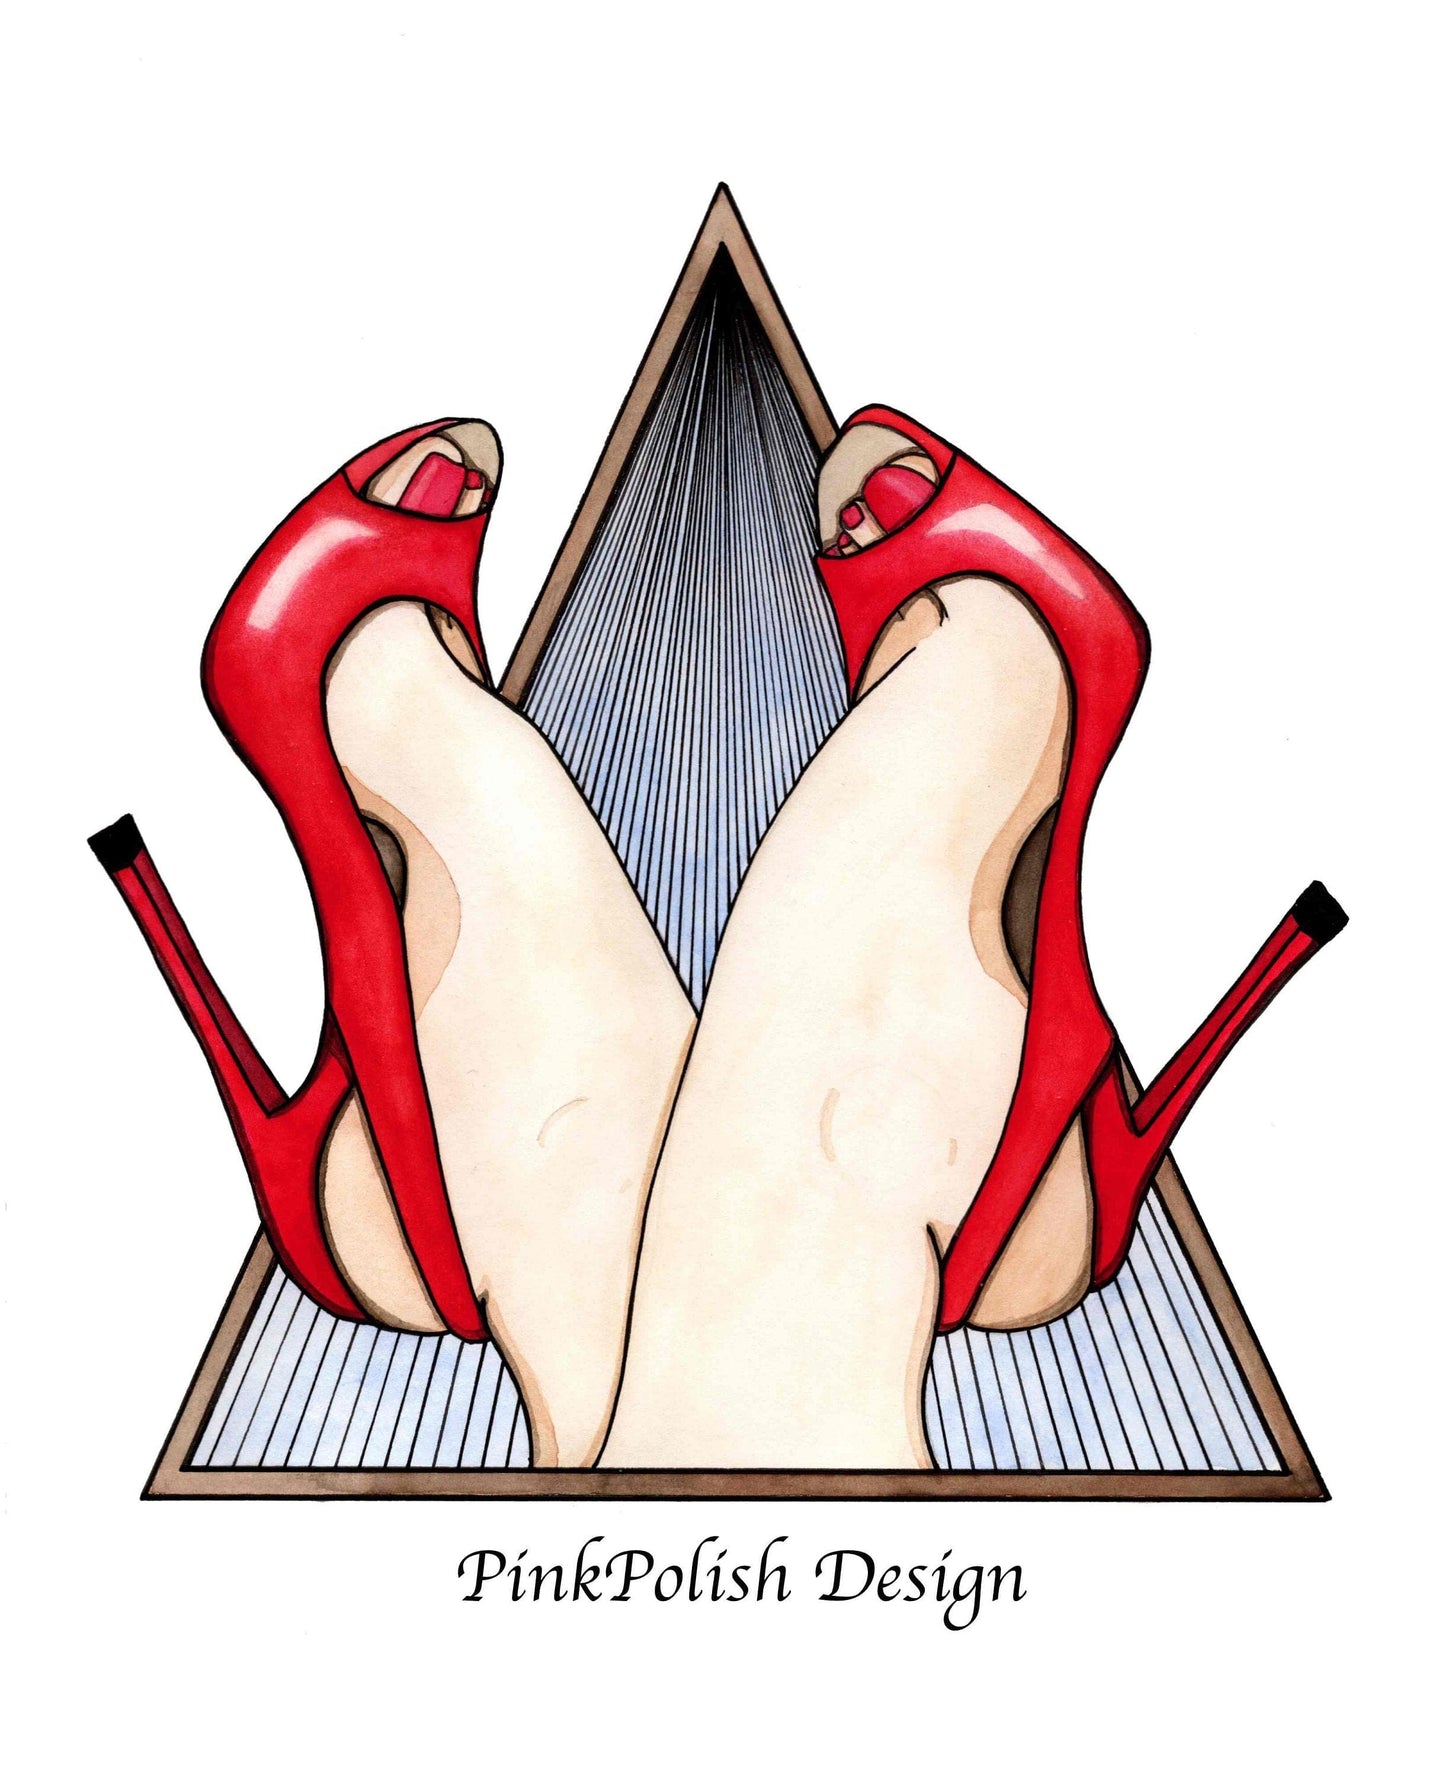 PinkPolish Design Art Prints "Kick Up Your Heels"  Watercolor Painting: Art Print